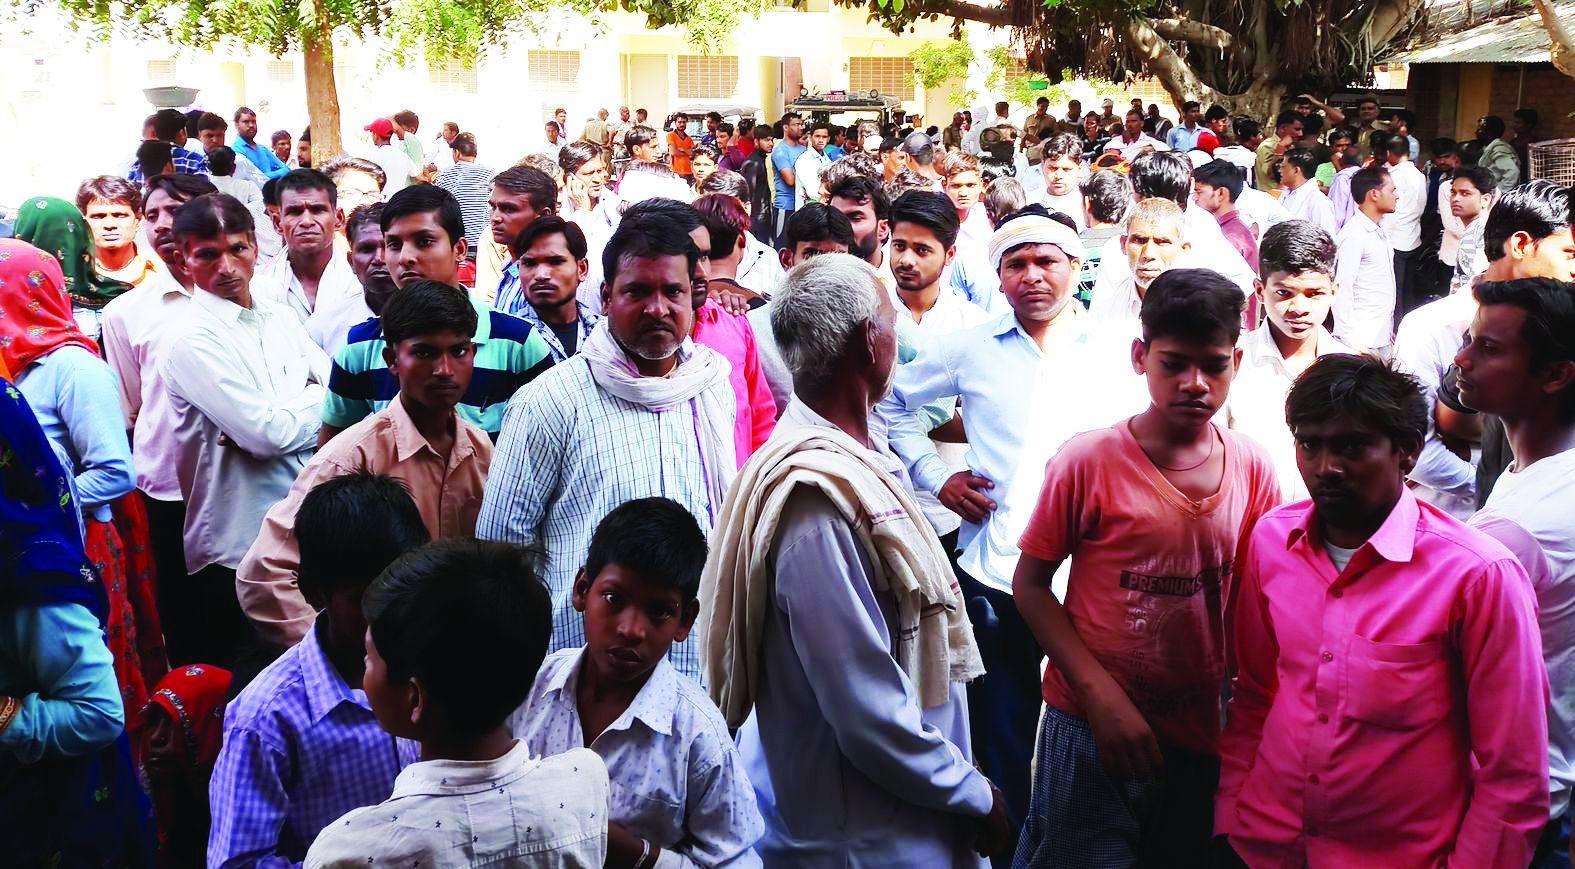  वजीरपुर के अस्पताल के बाहर जमा भीड़।